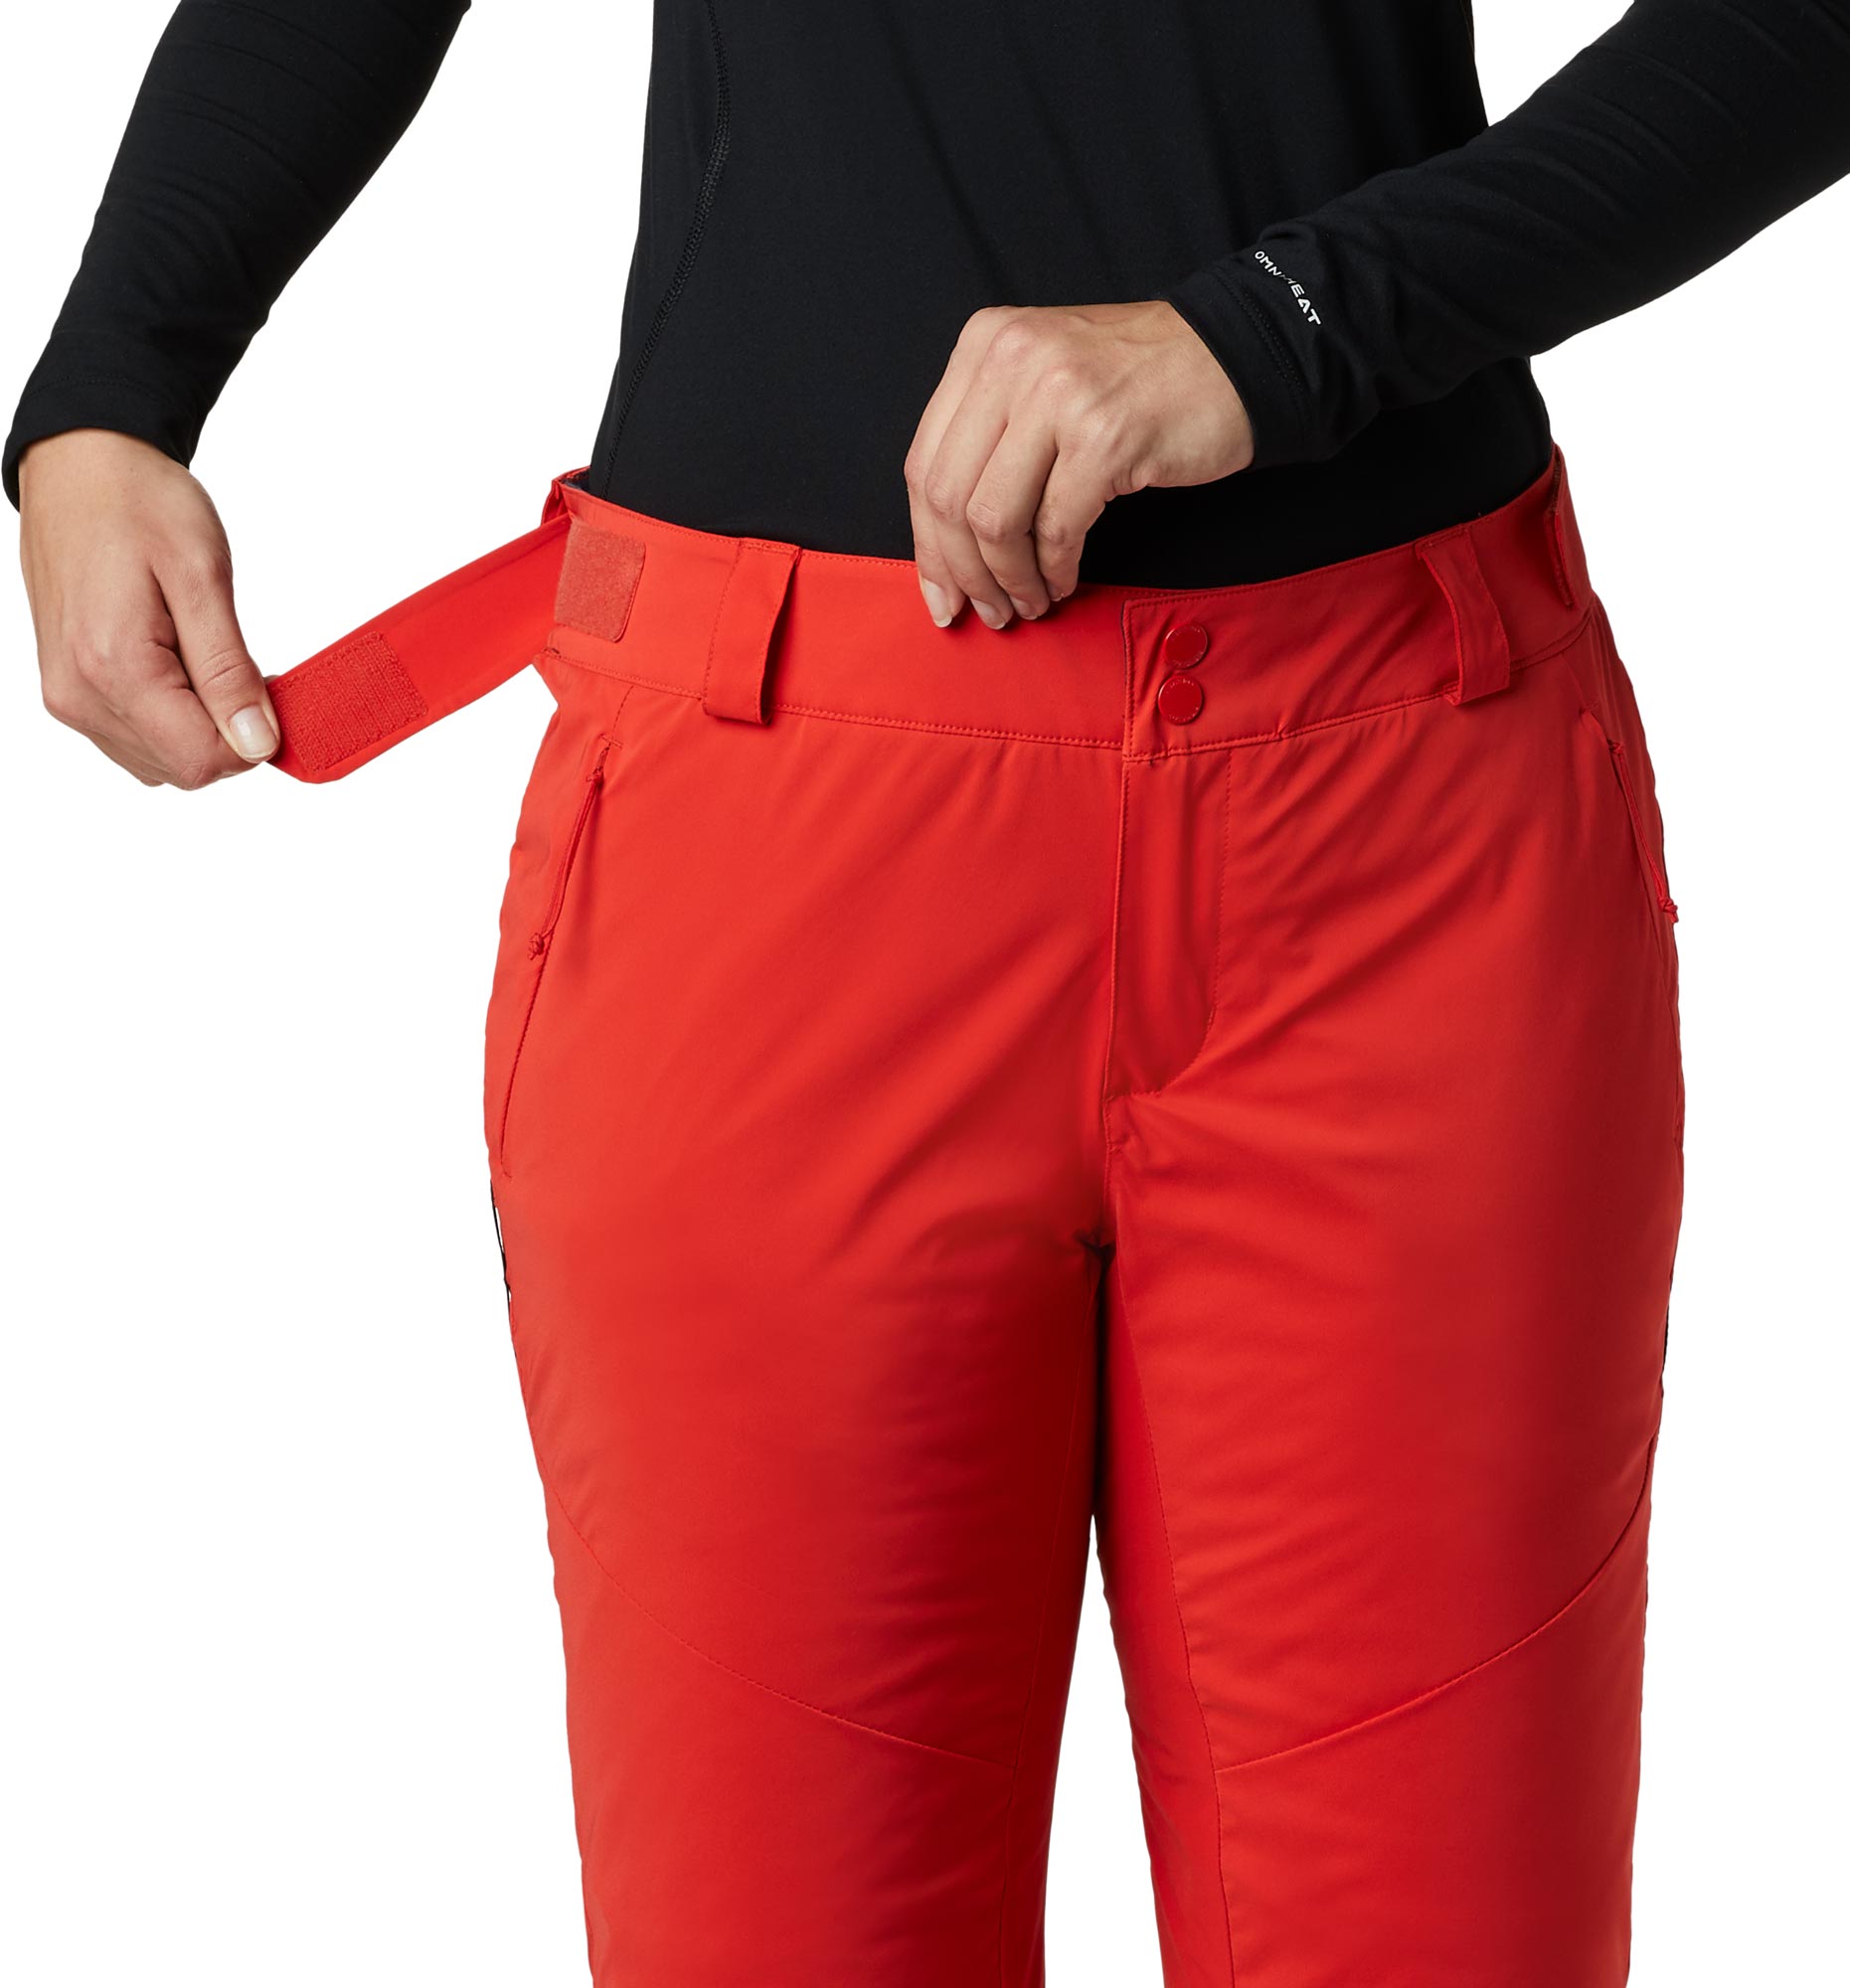 Women’s insulated ski trousers